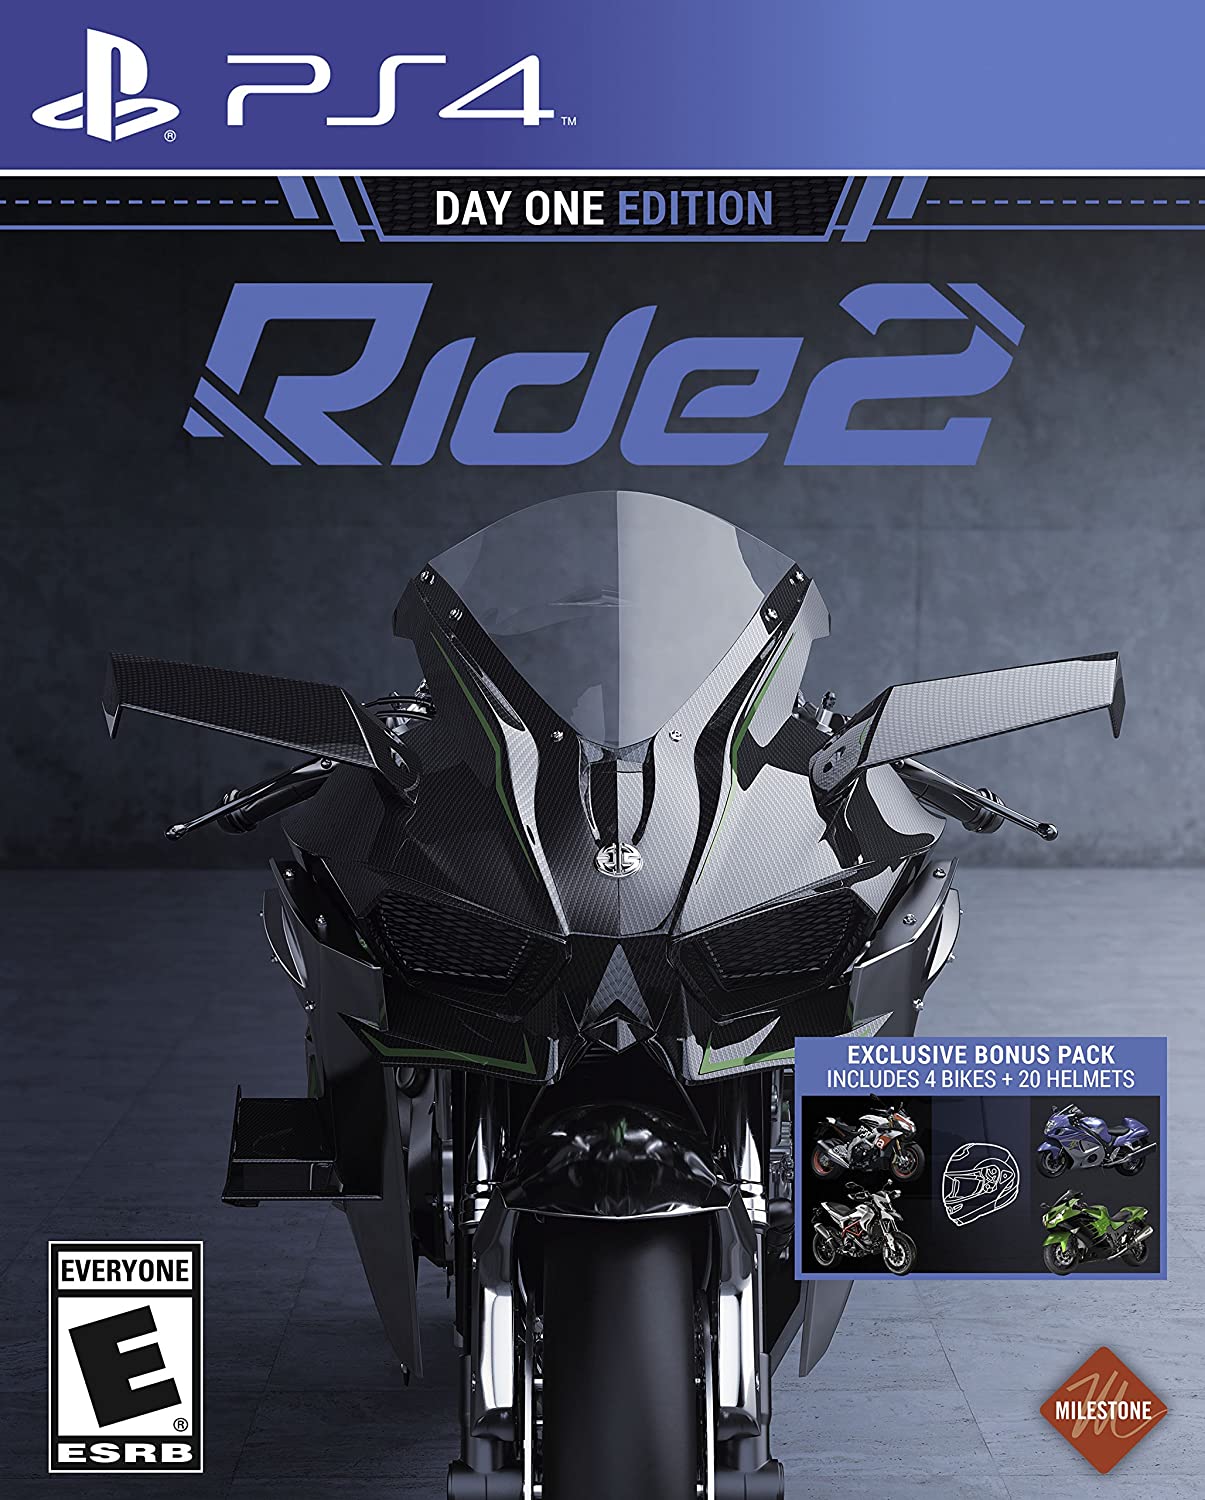 Ride 2 PS4